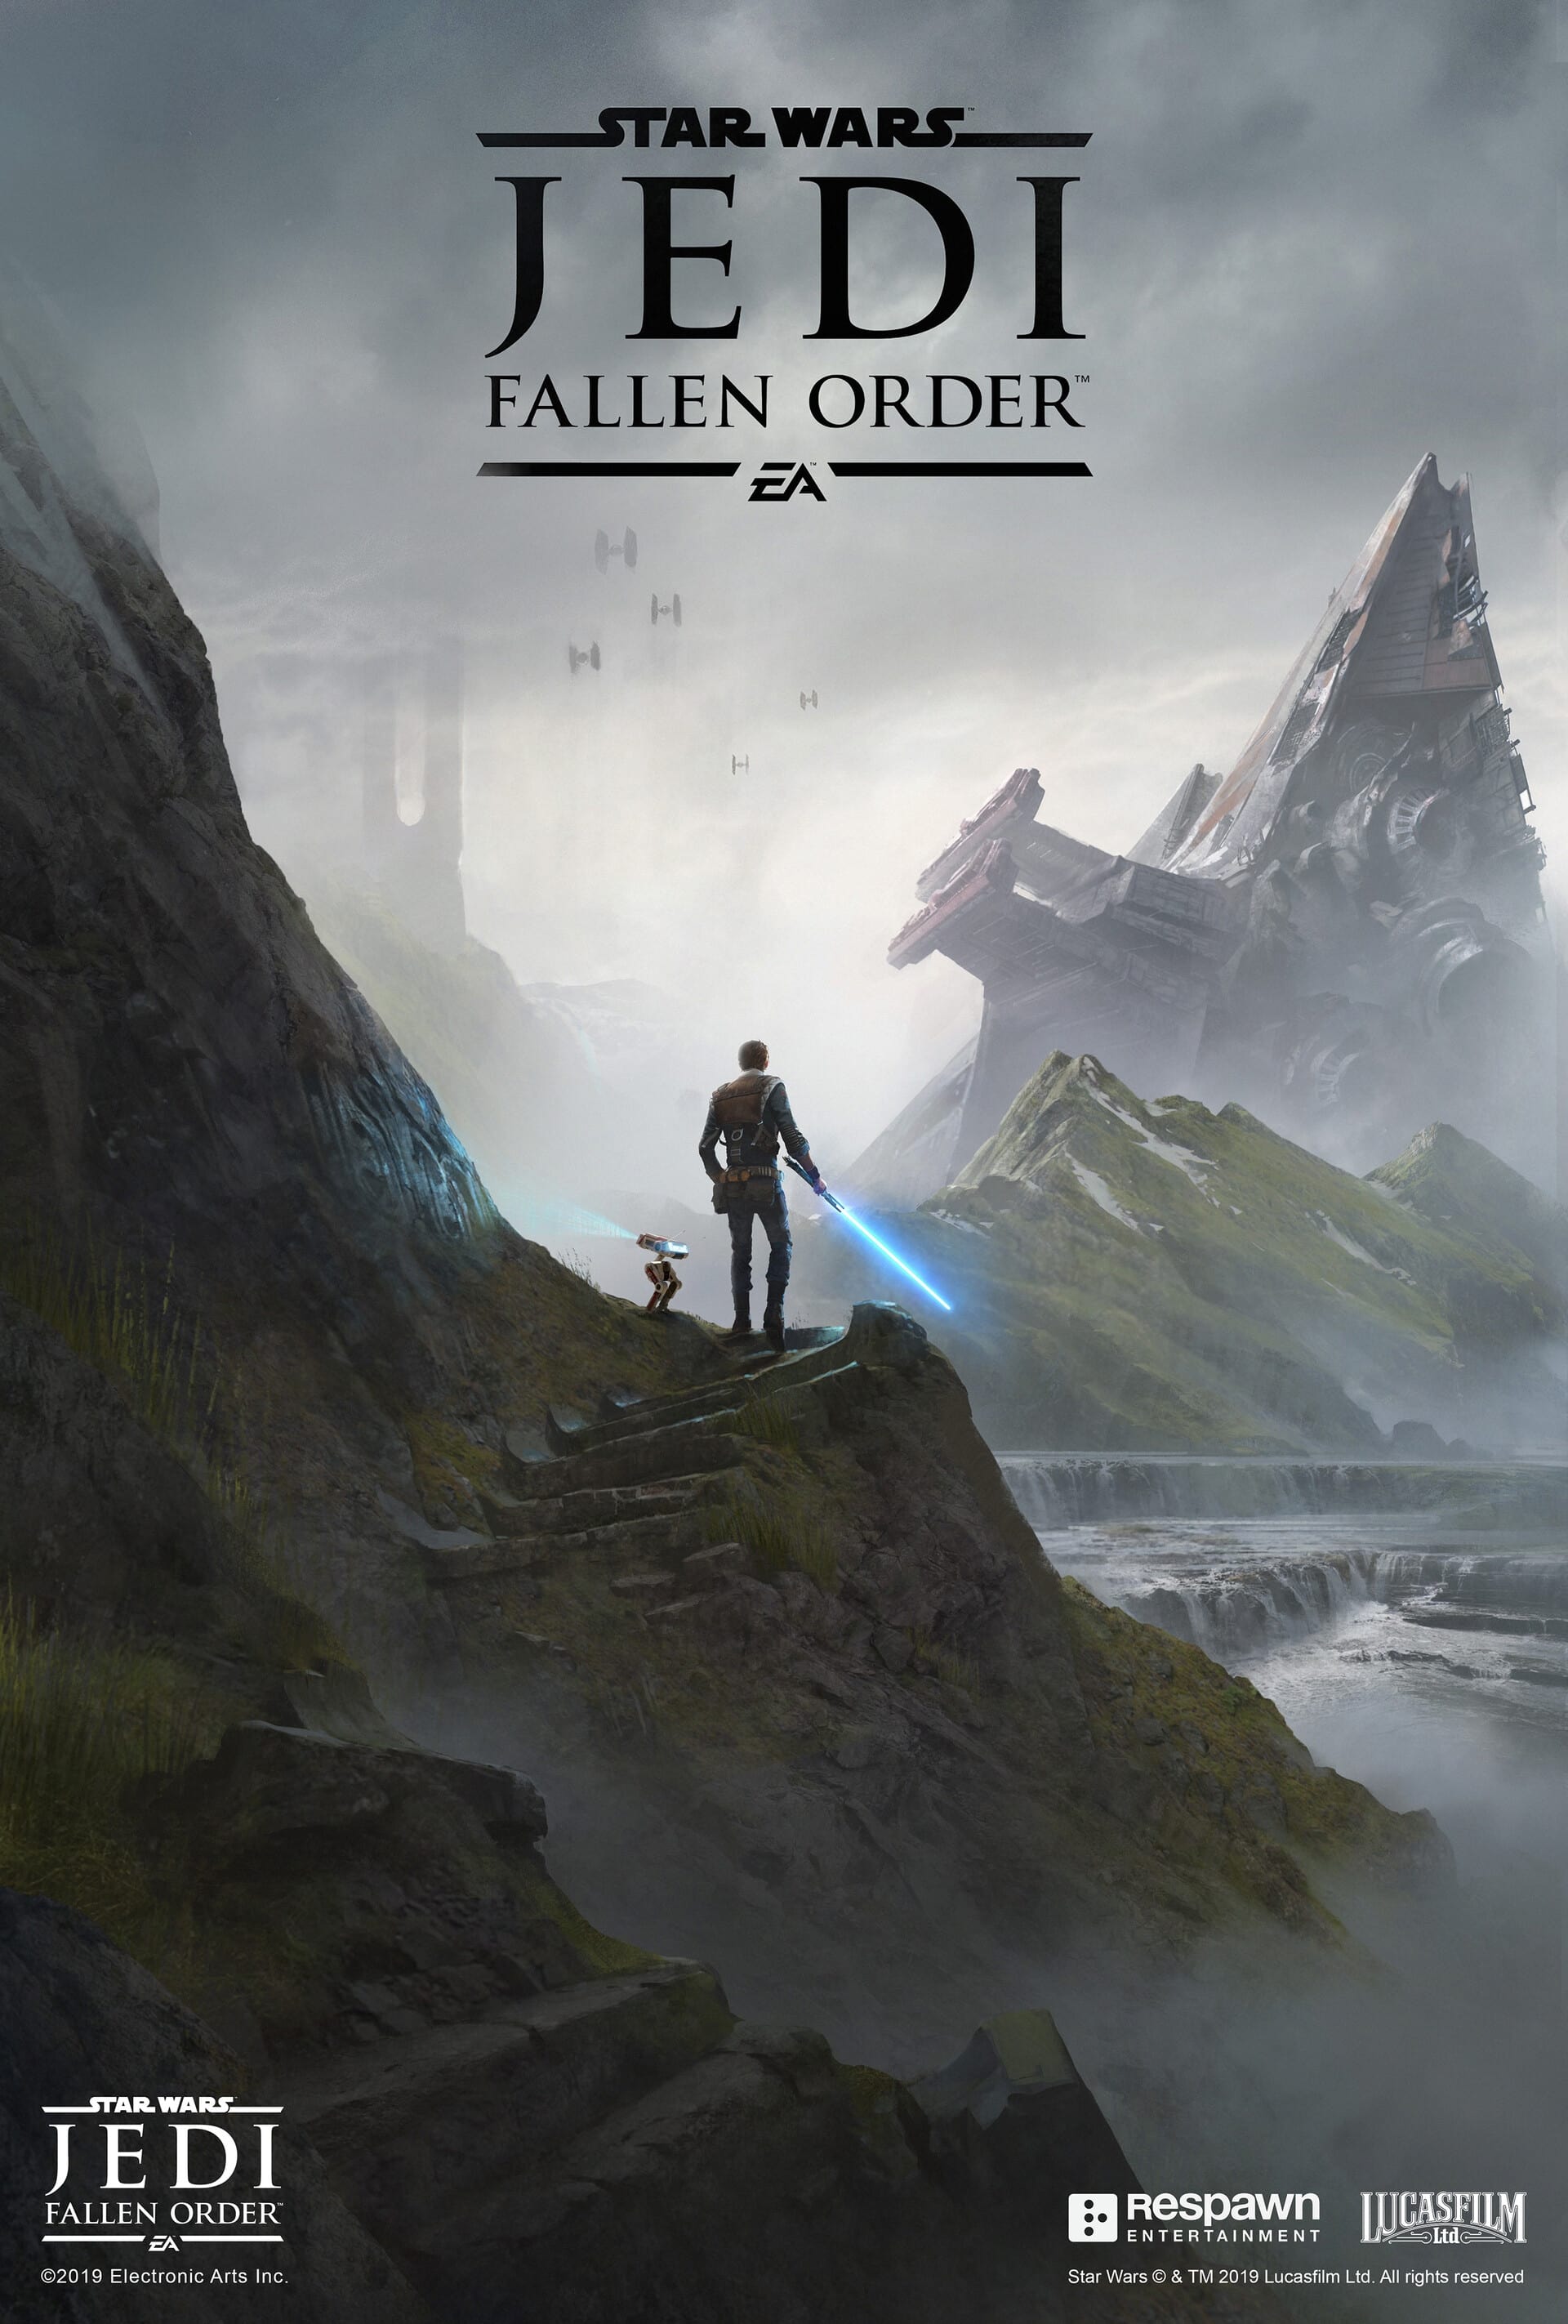 Built by Jedi - The Making of Star Wars Jedi: Fallen Order